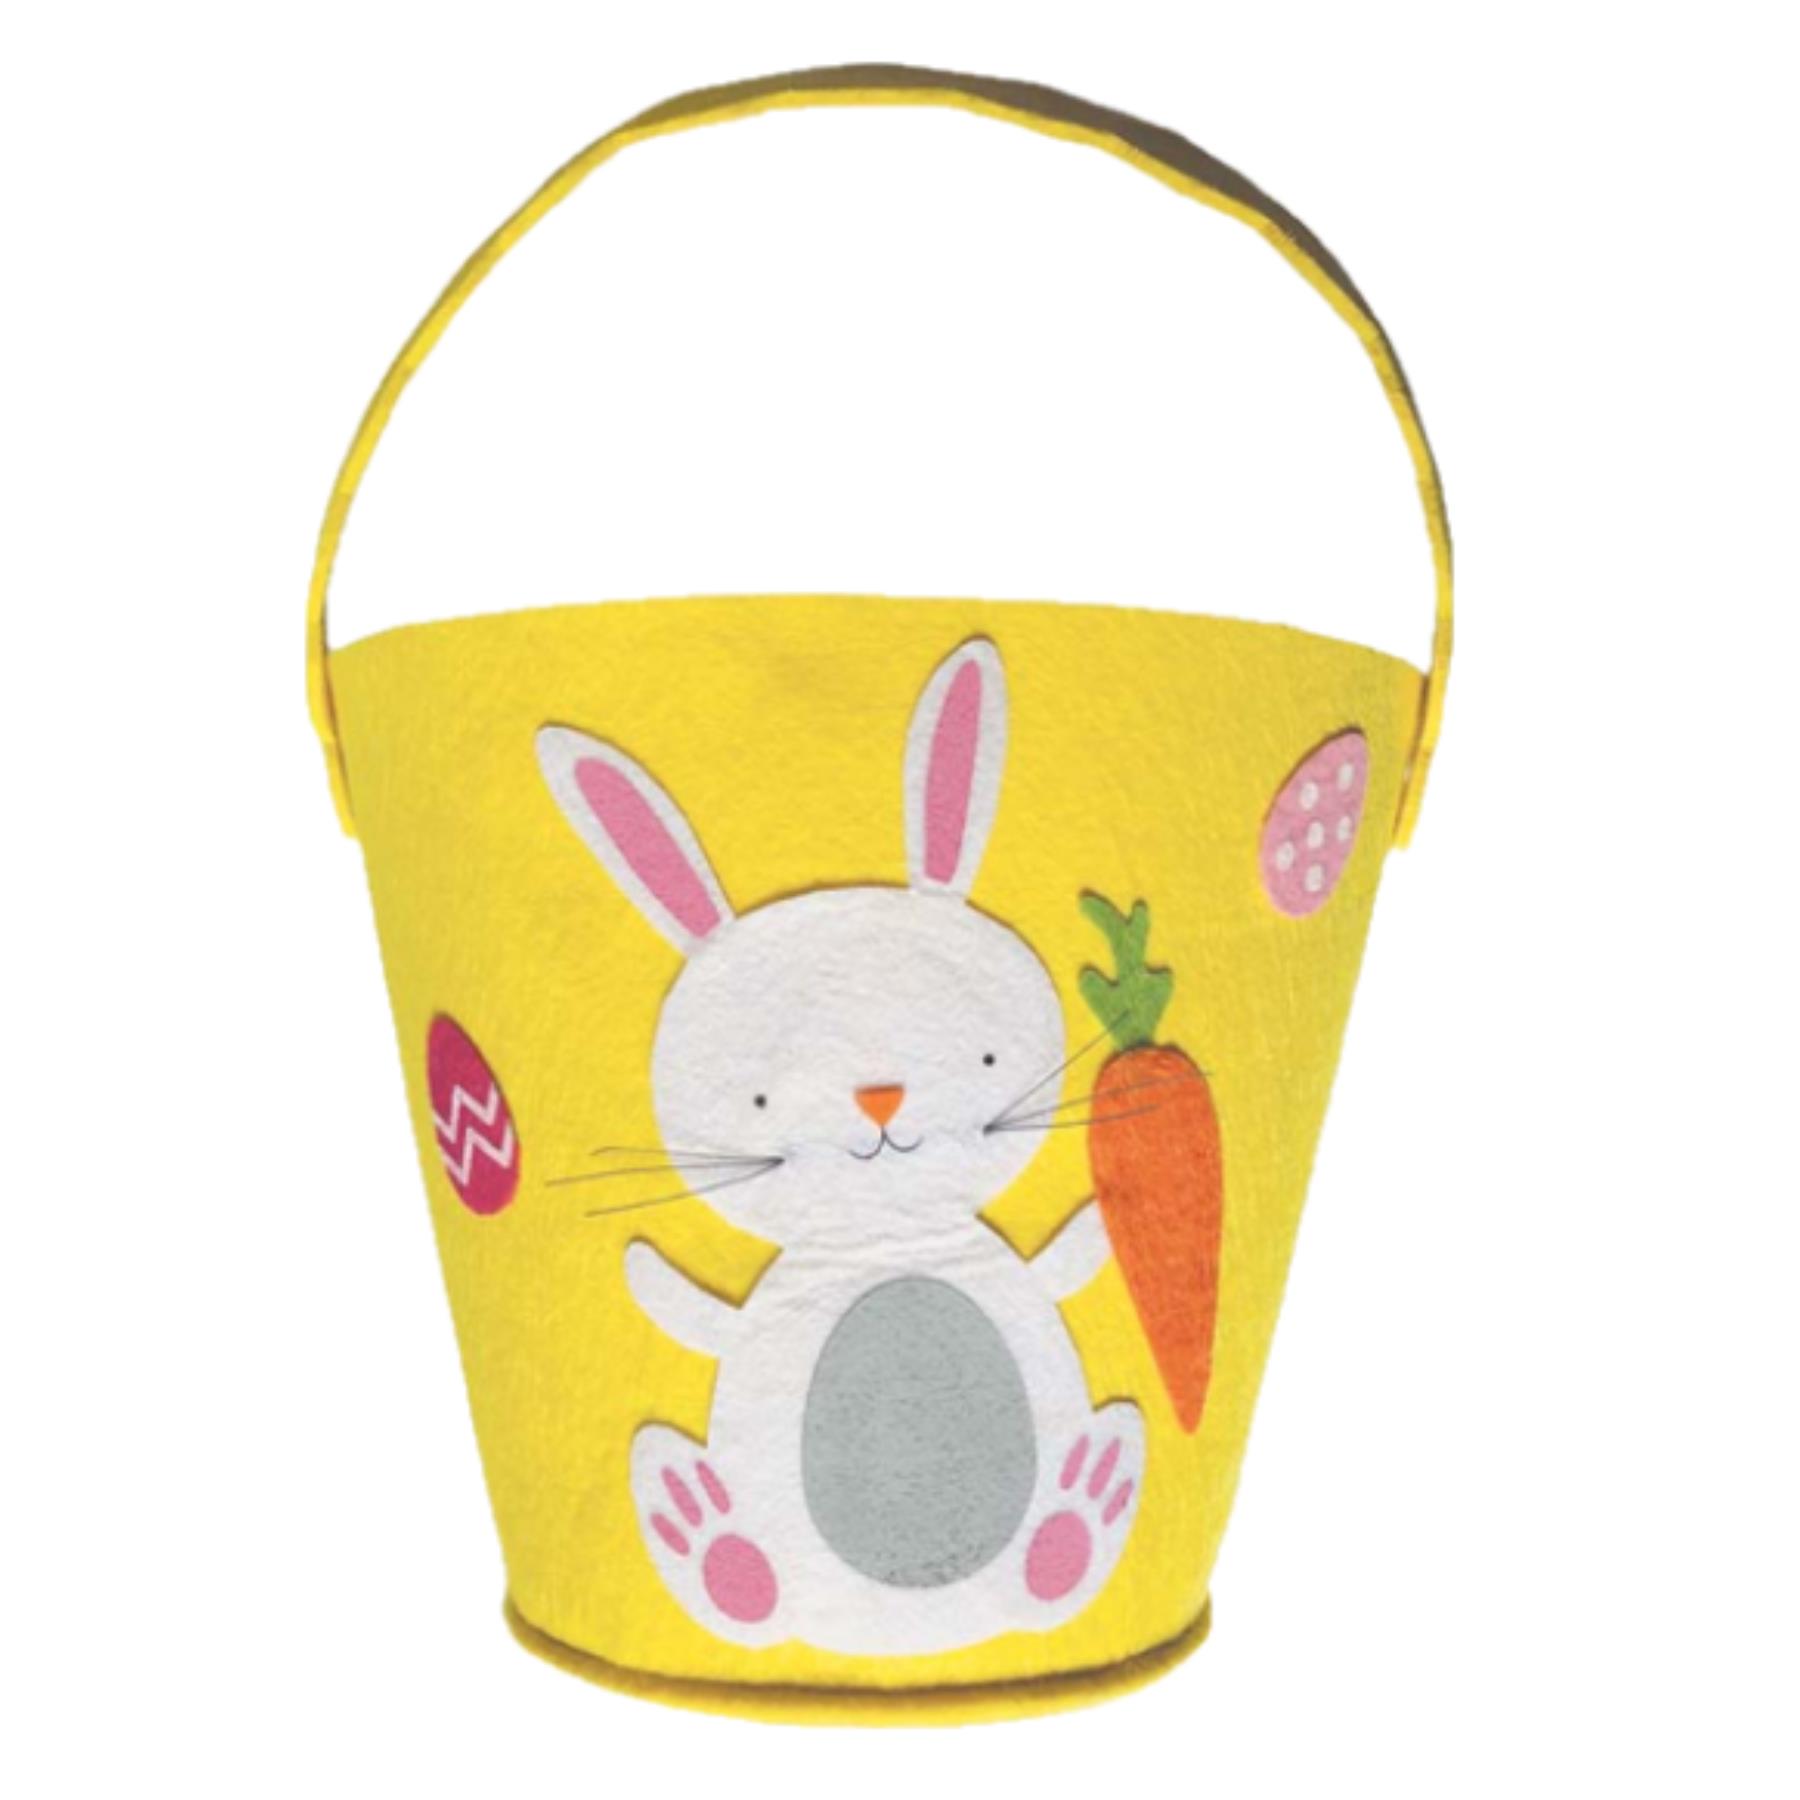 Easter Baskets, Buckets, Egg Hunt Accessories - Felt Bucket Yellow Bunny